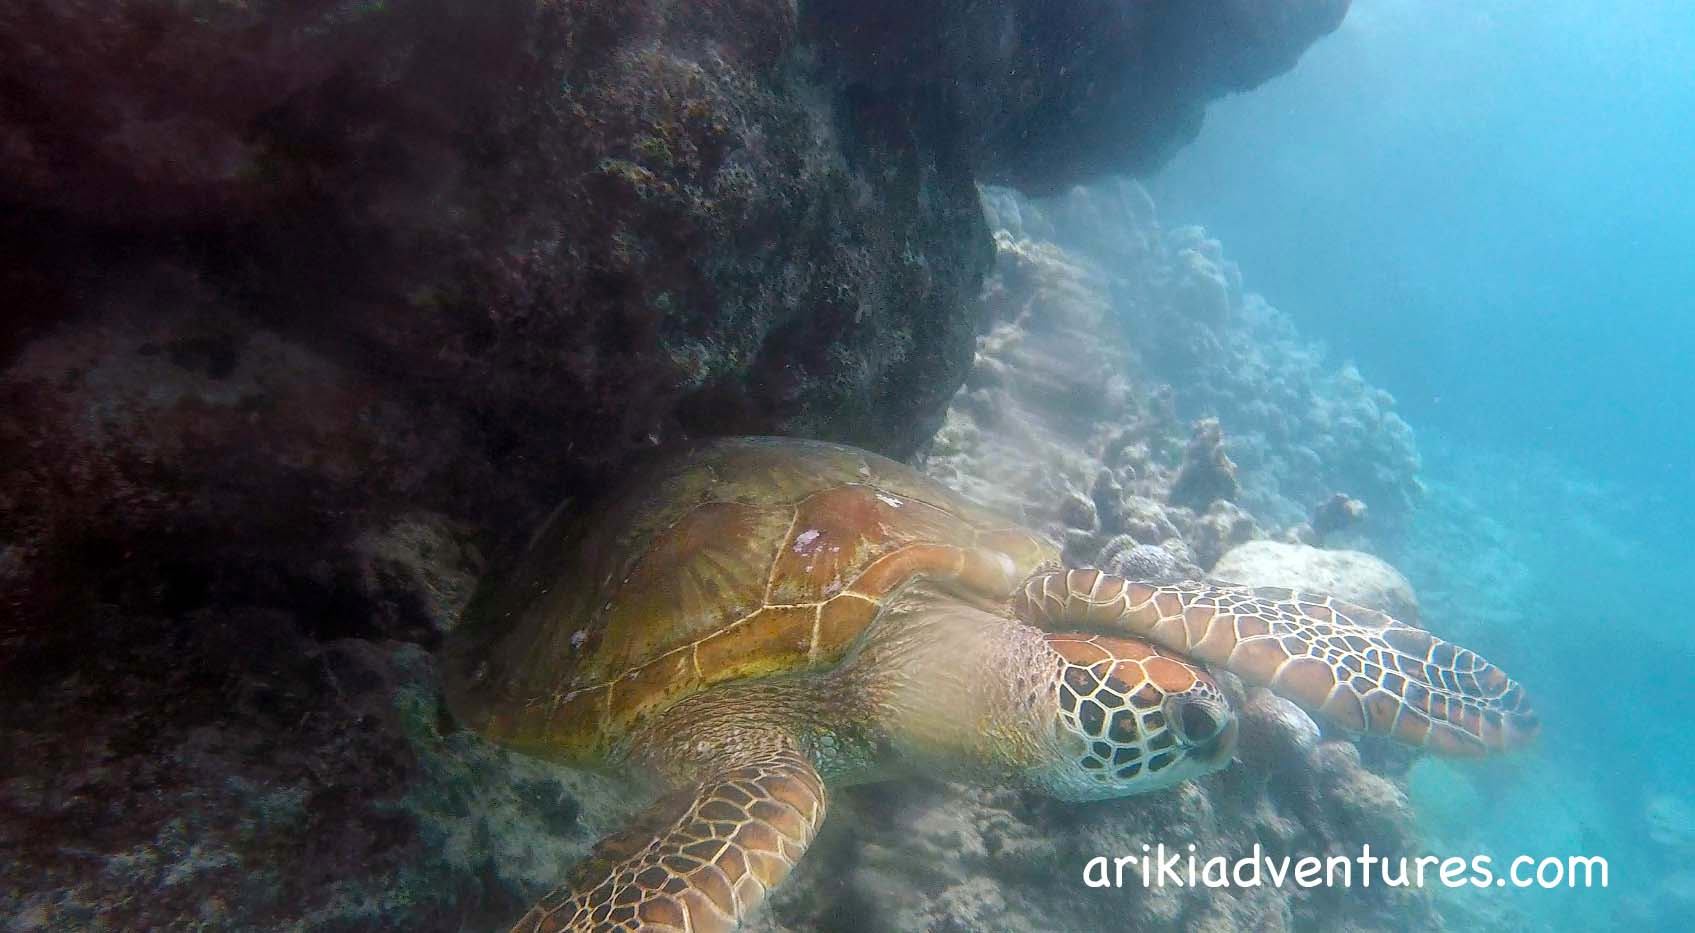 Turtle hiding under coral ledge - 17th July 2019.jpg